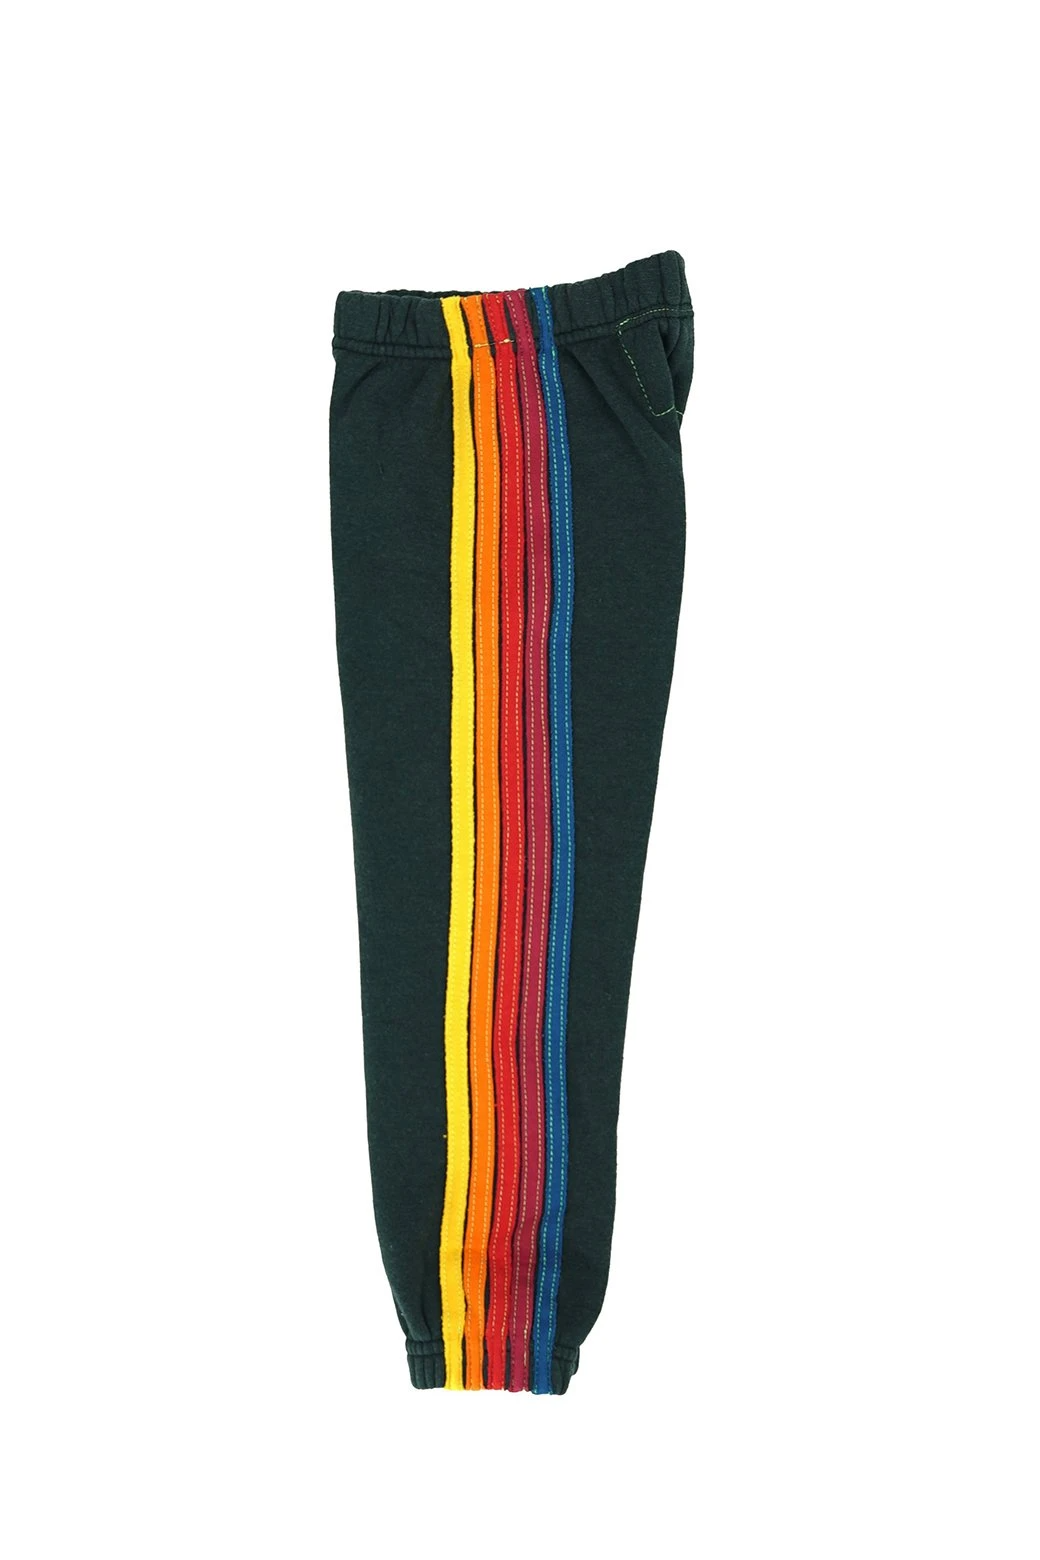 Aviator Nation Kid's 5 Stripe Sweatpants -Charcoal